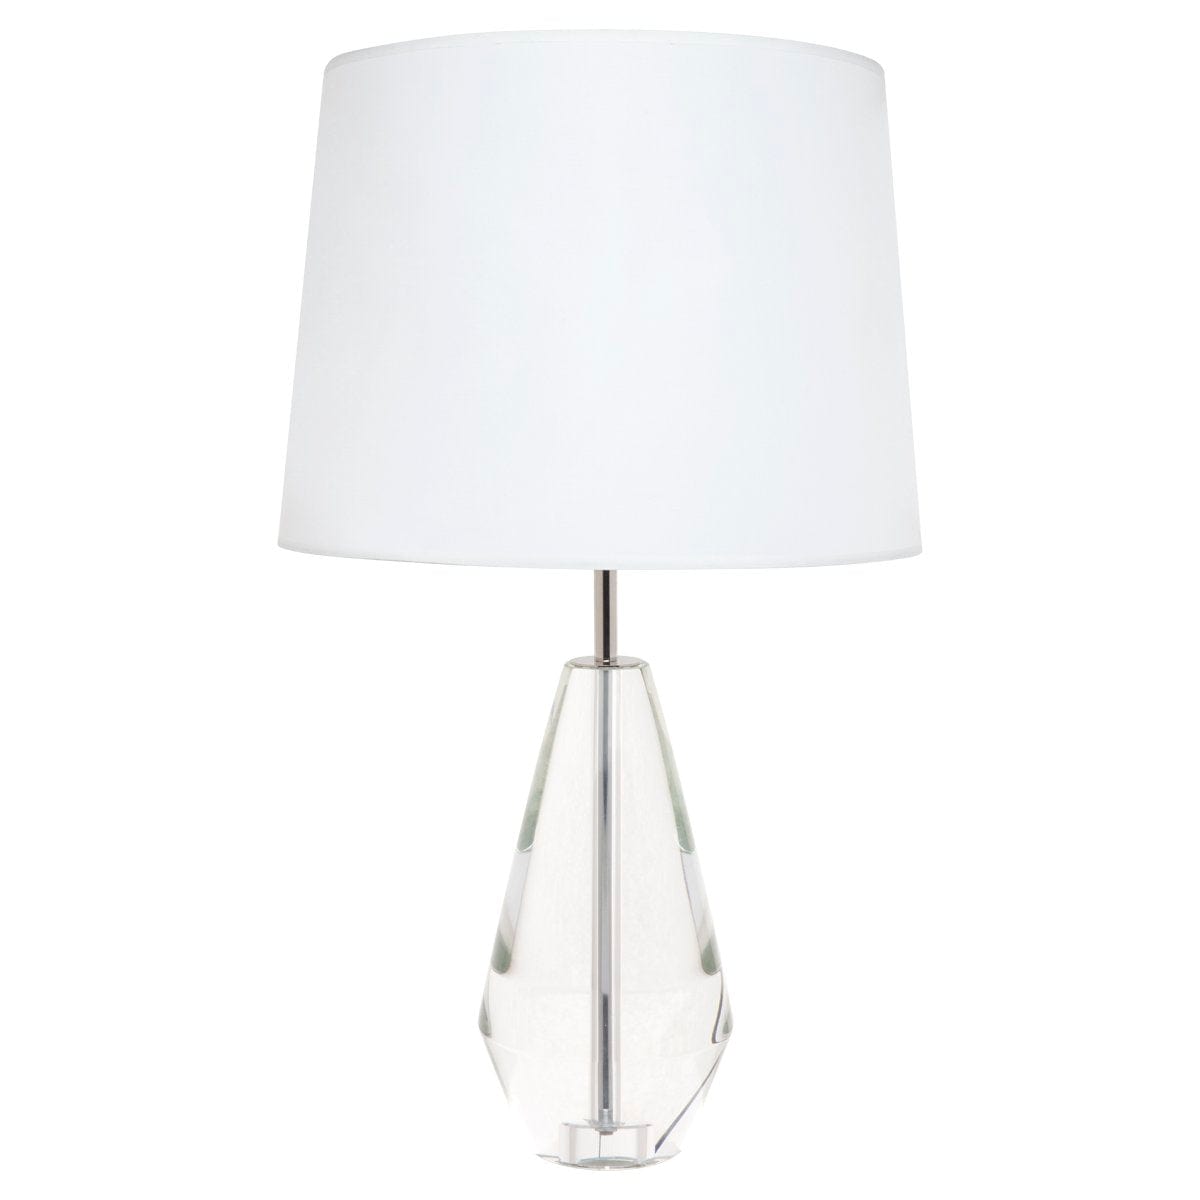 CAFE LIGHTING & LIVING Table Lamp Gizelle Crystal Table Lamp B13315